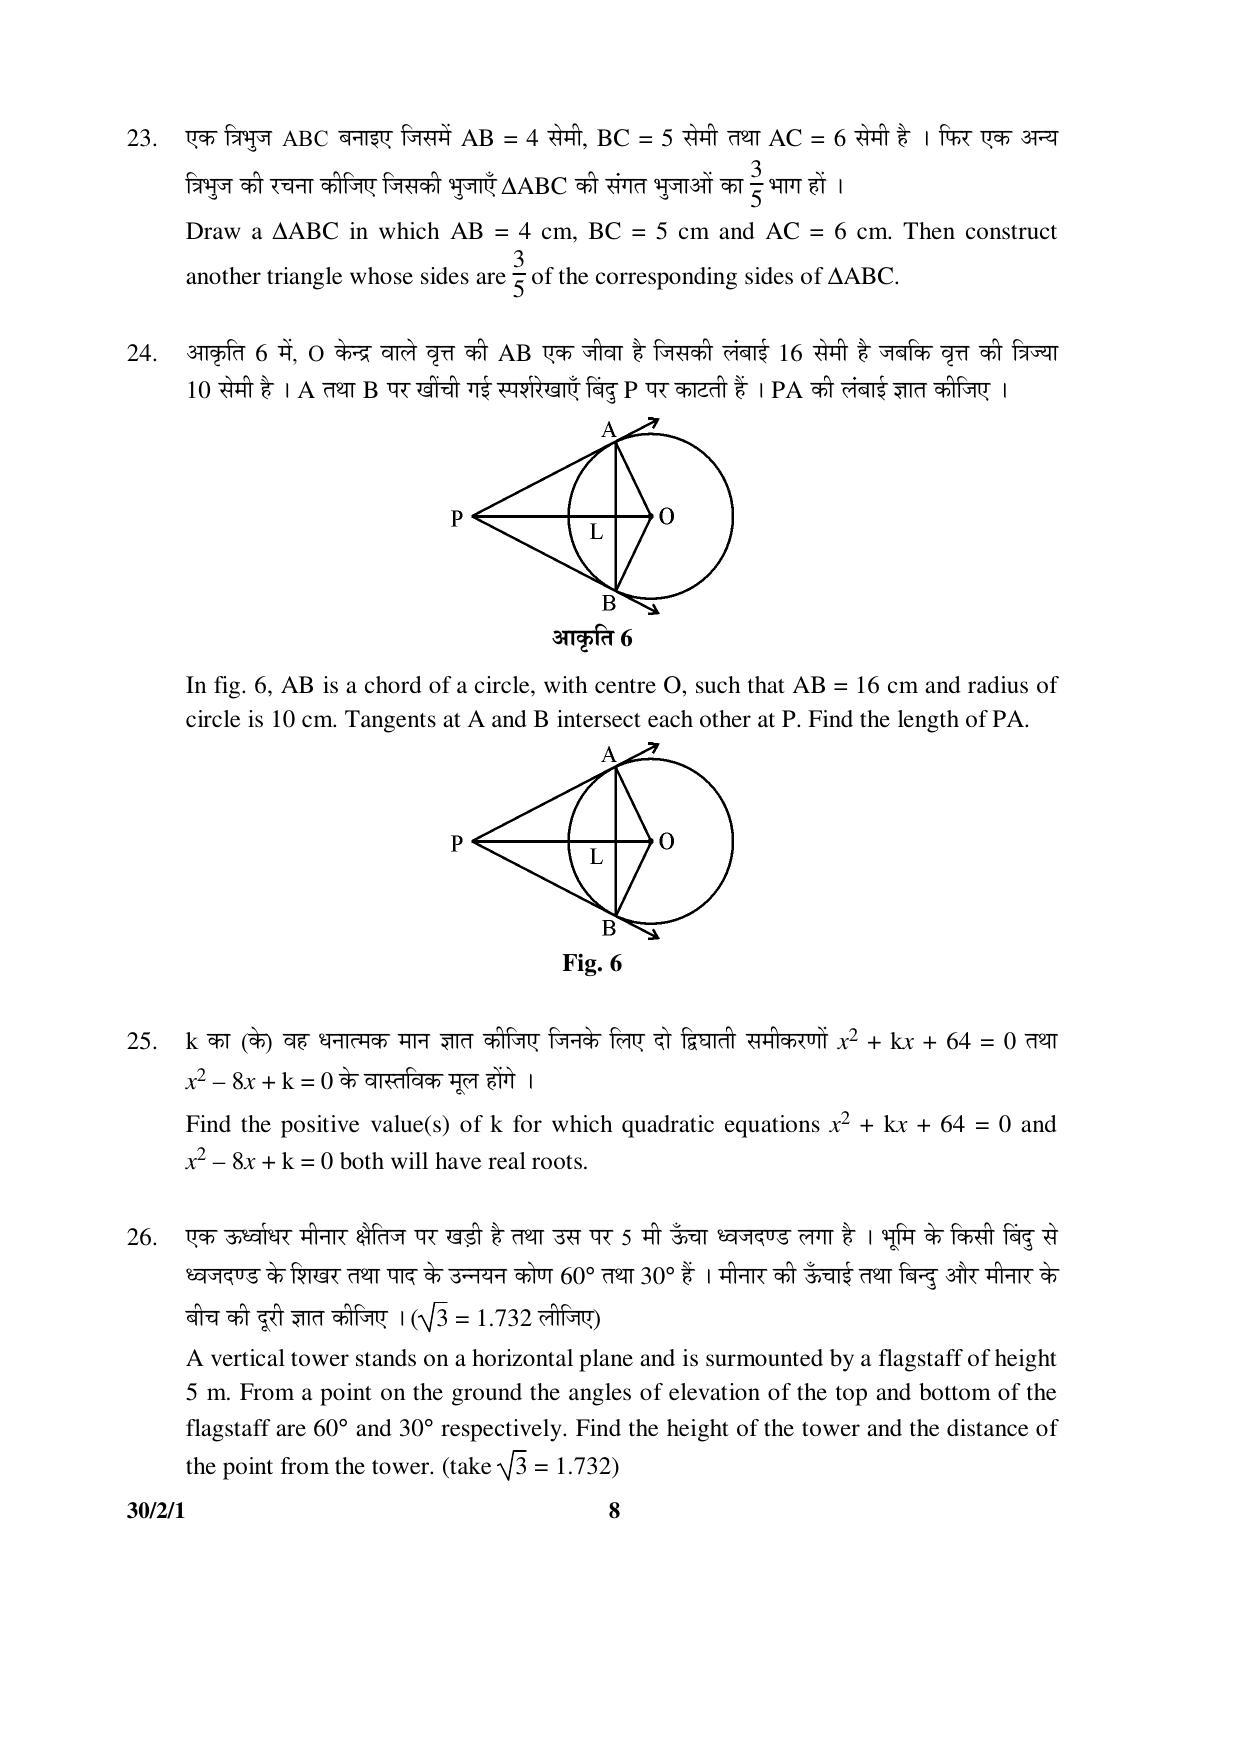 CBSE Class 10 30-2-1 _Mathematics 2016 Question Paper - Page 8